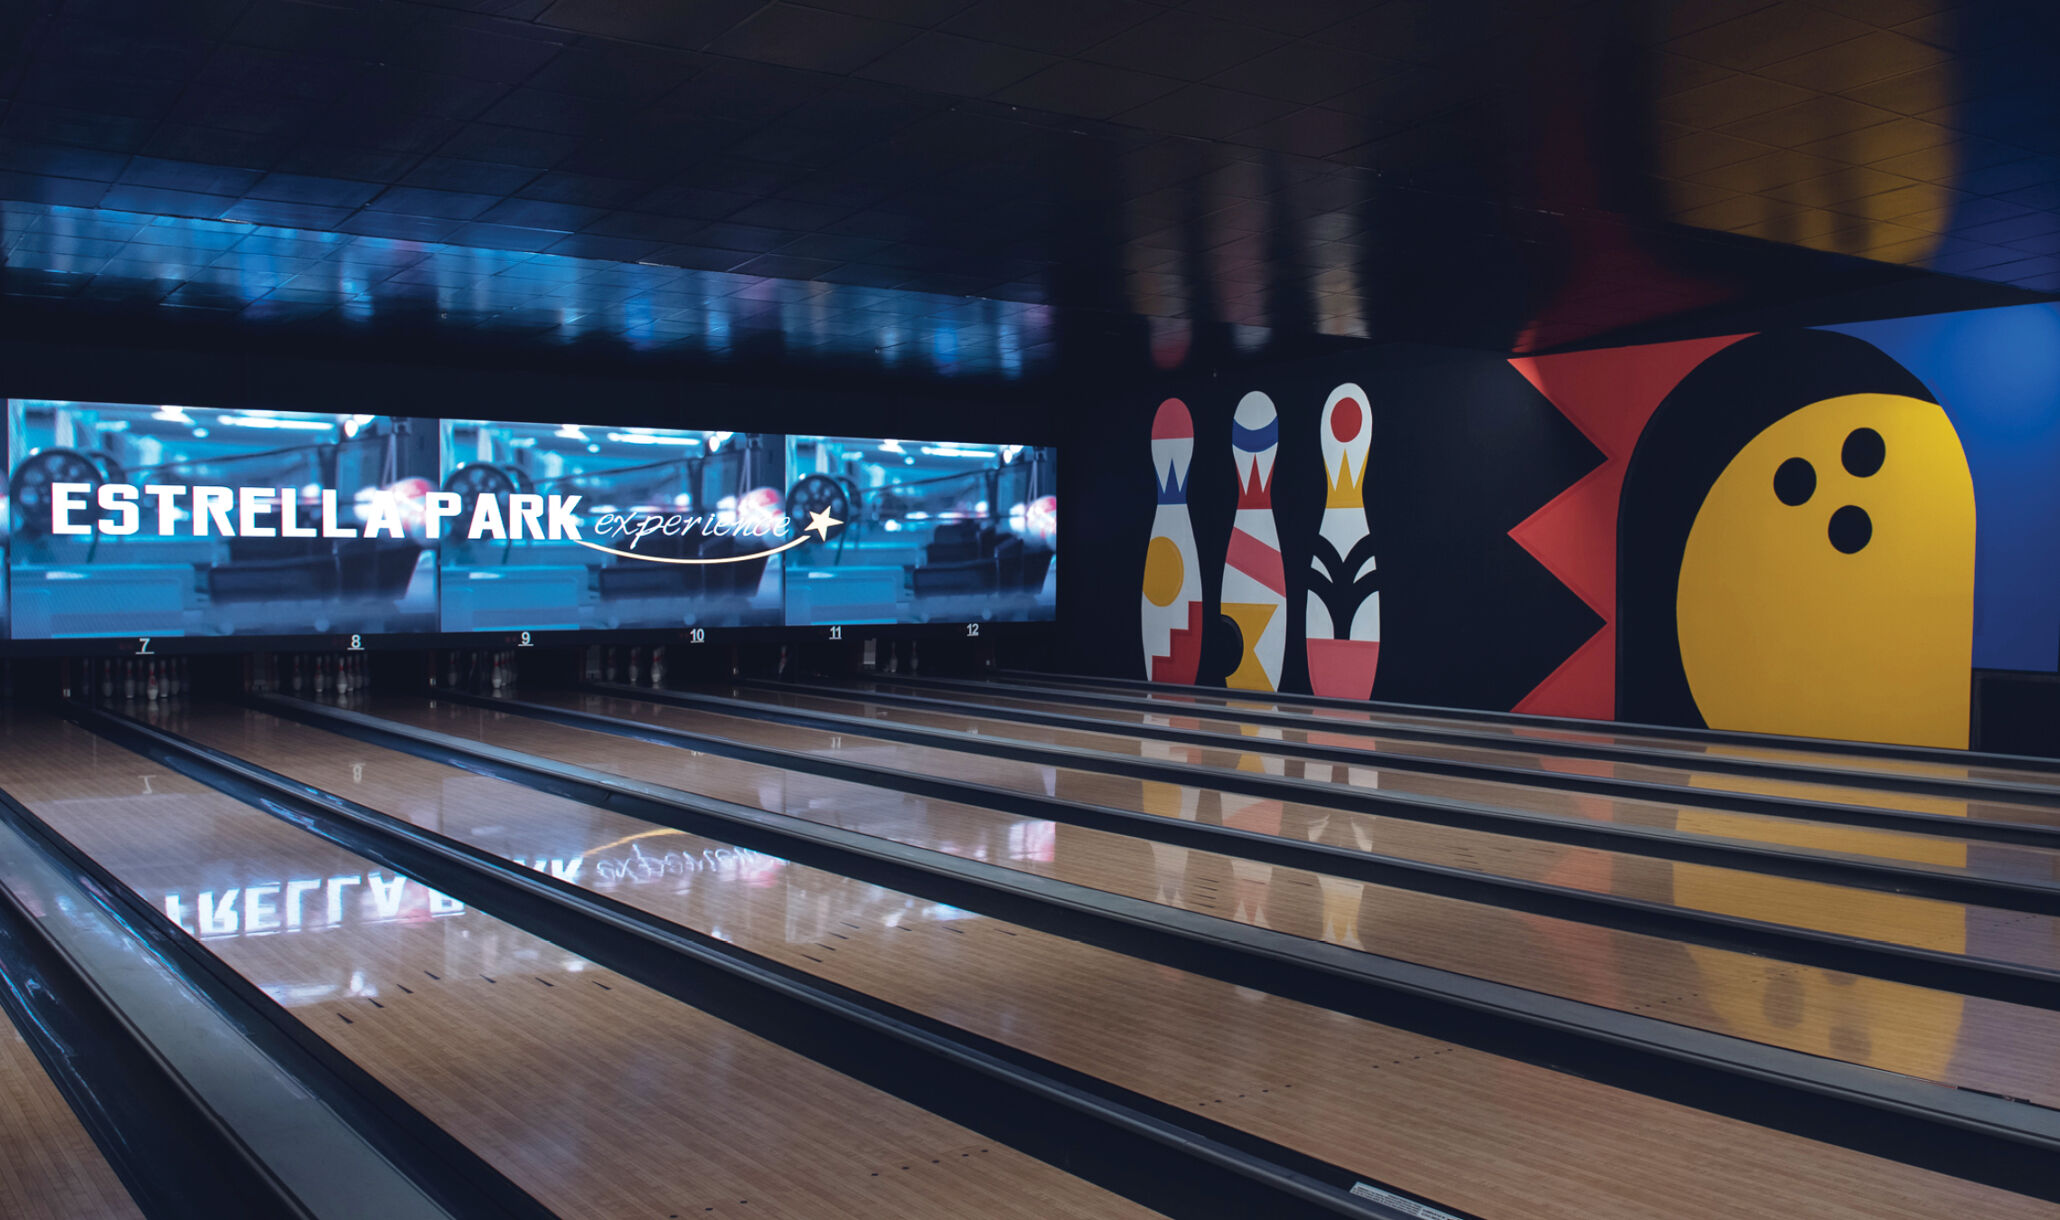 Estrella Park Bowling - Madrid, Spain - On the lanes-3